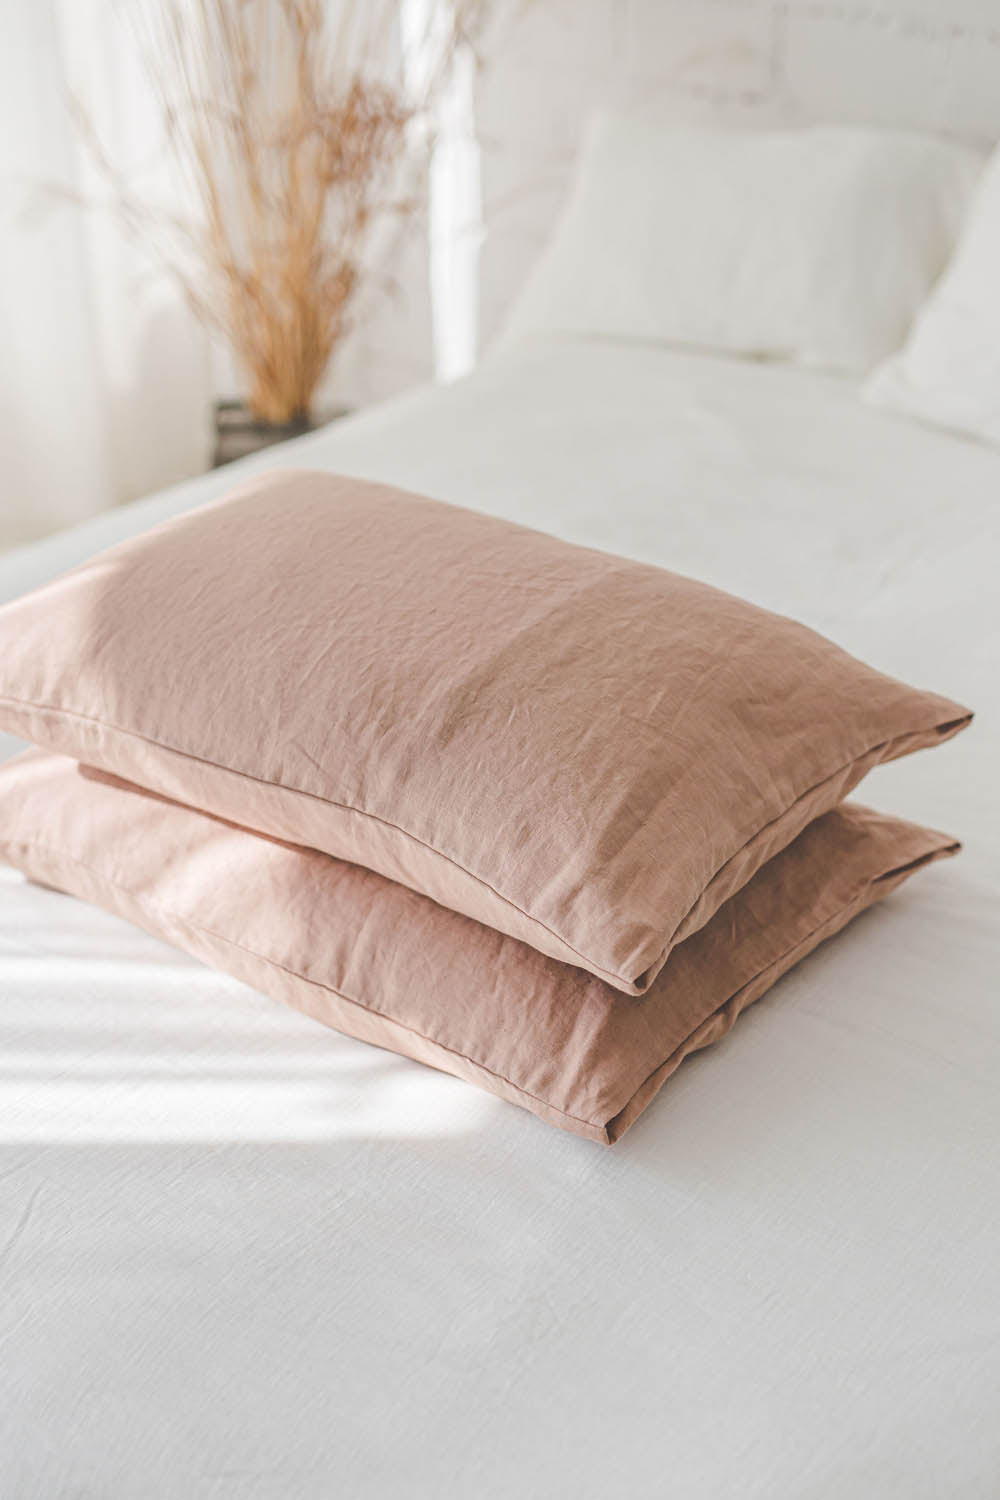 Misty rose linen pillowcase